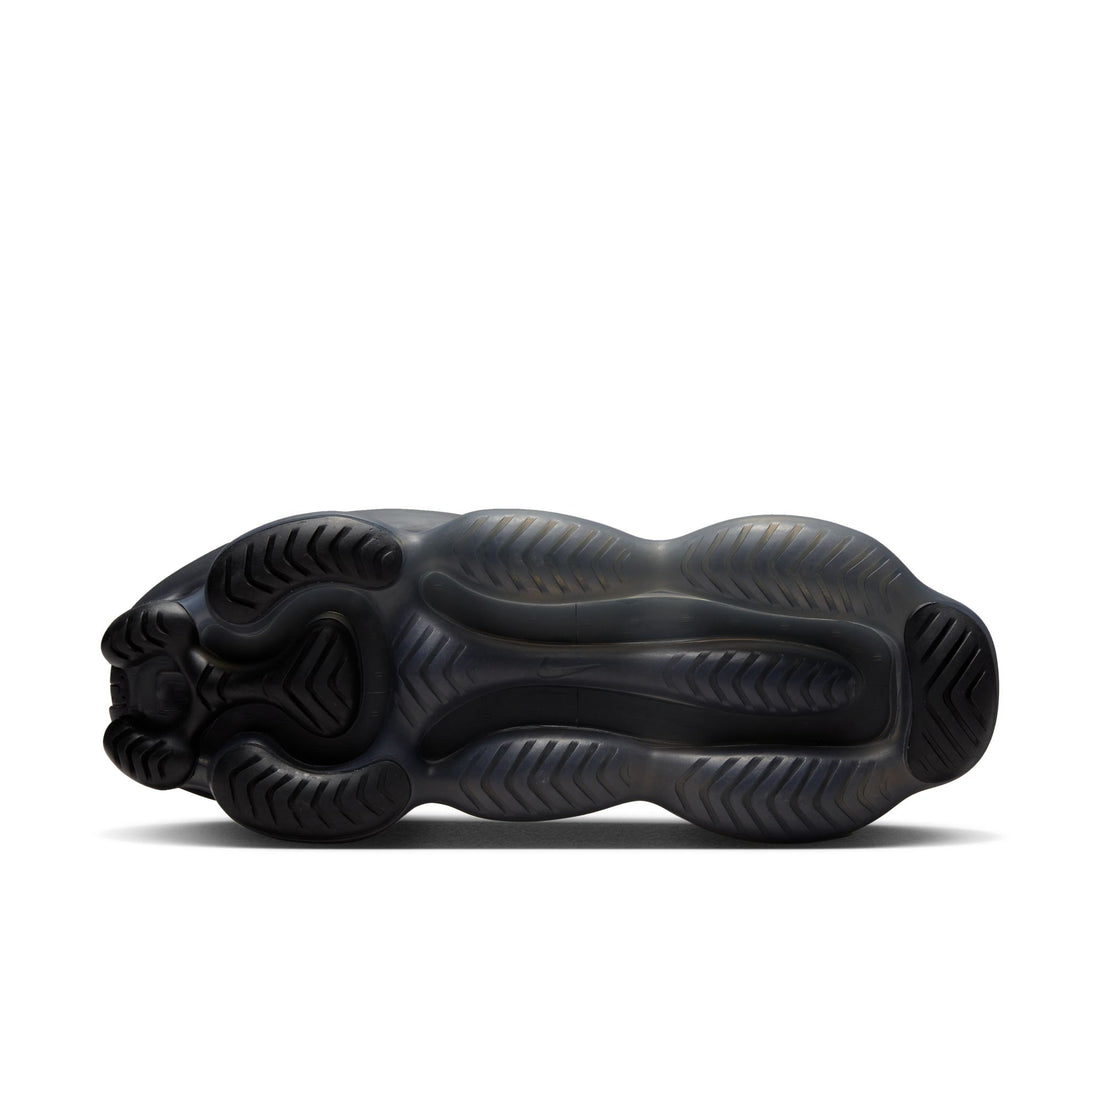 WMNS Nike Air Max Scorpion Flyknit FK (Black/Anthracite/Black)